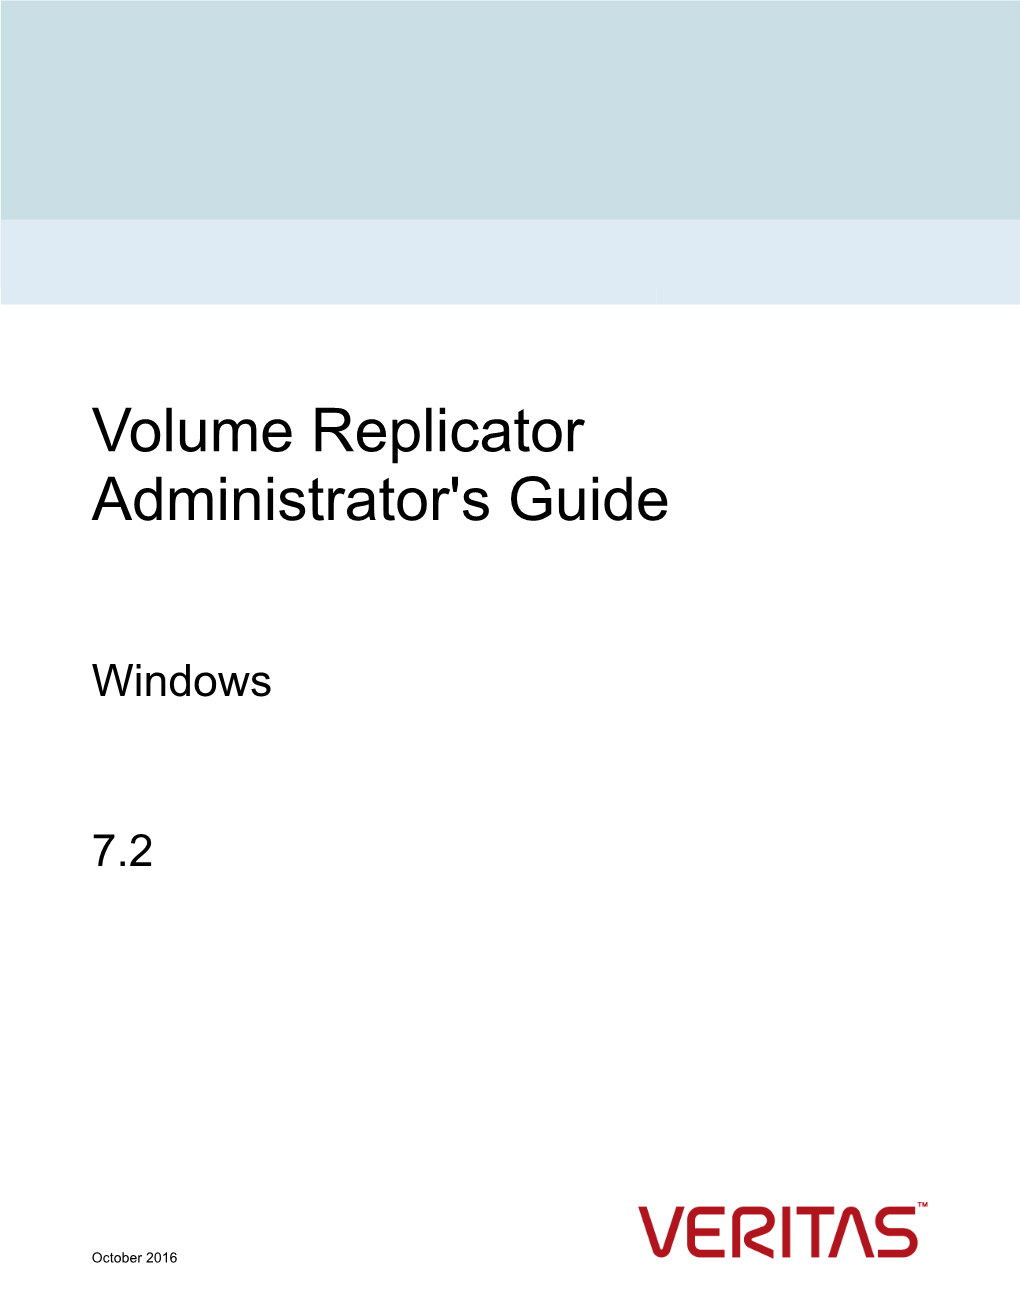 Volume Replicator Administrator's Guide